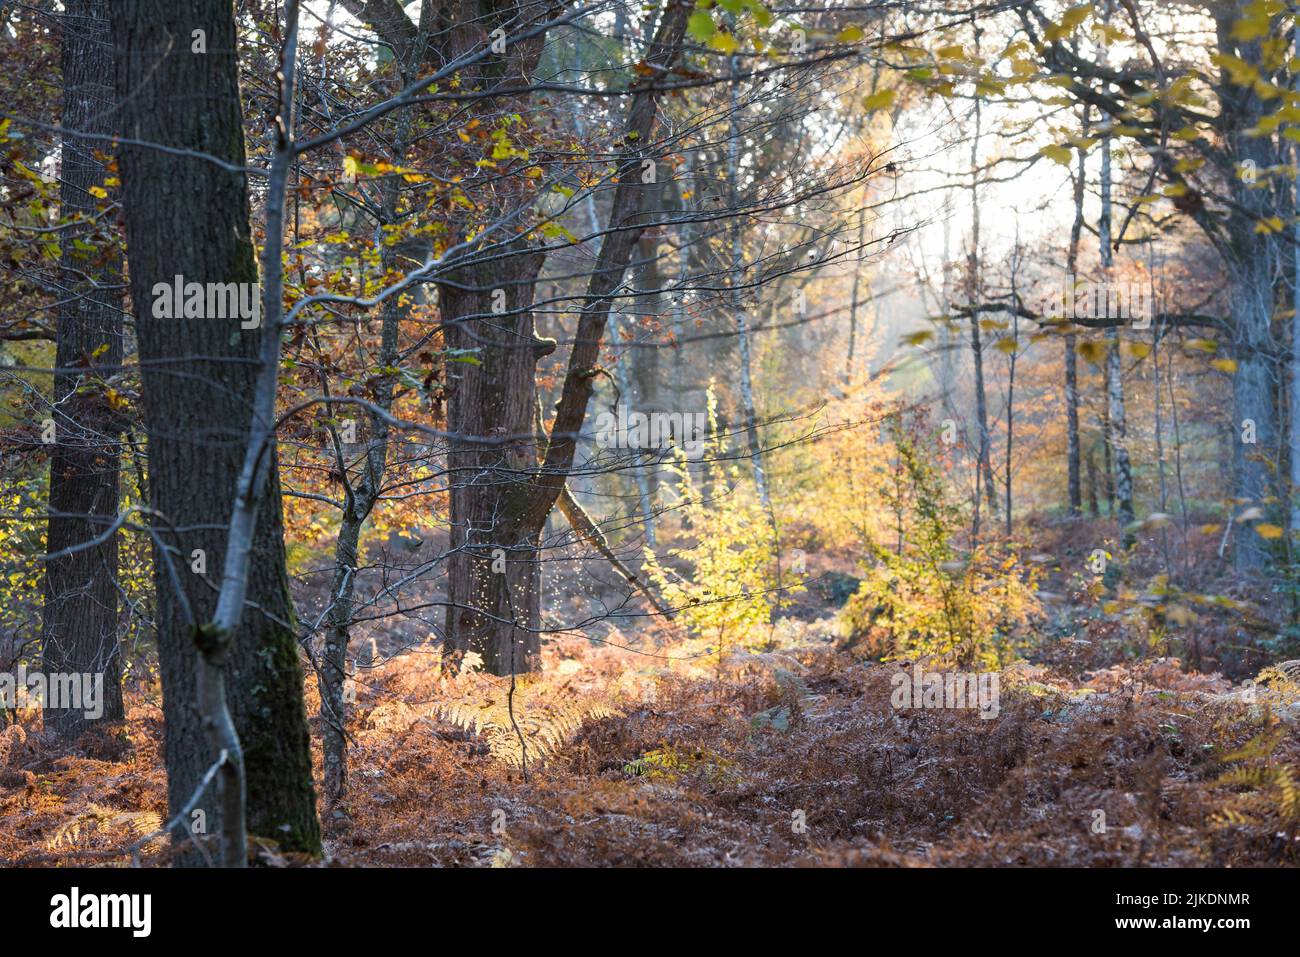 Forest of Rambouillet, Haute Vallee de Chevreuse Regional Natural Park, Yvelines department, Ile-de-France region, France, Europe. Stock Photo